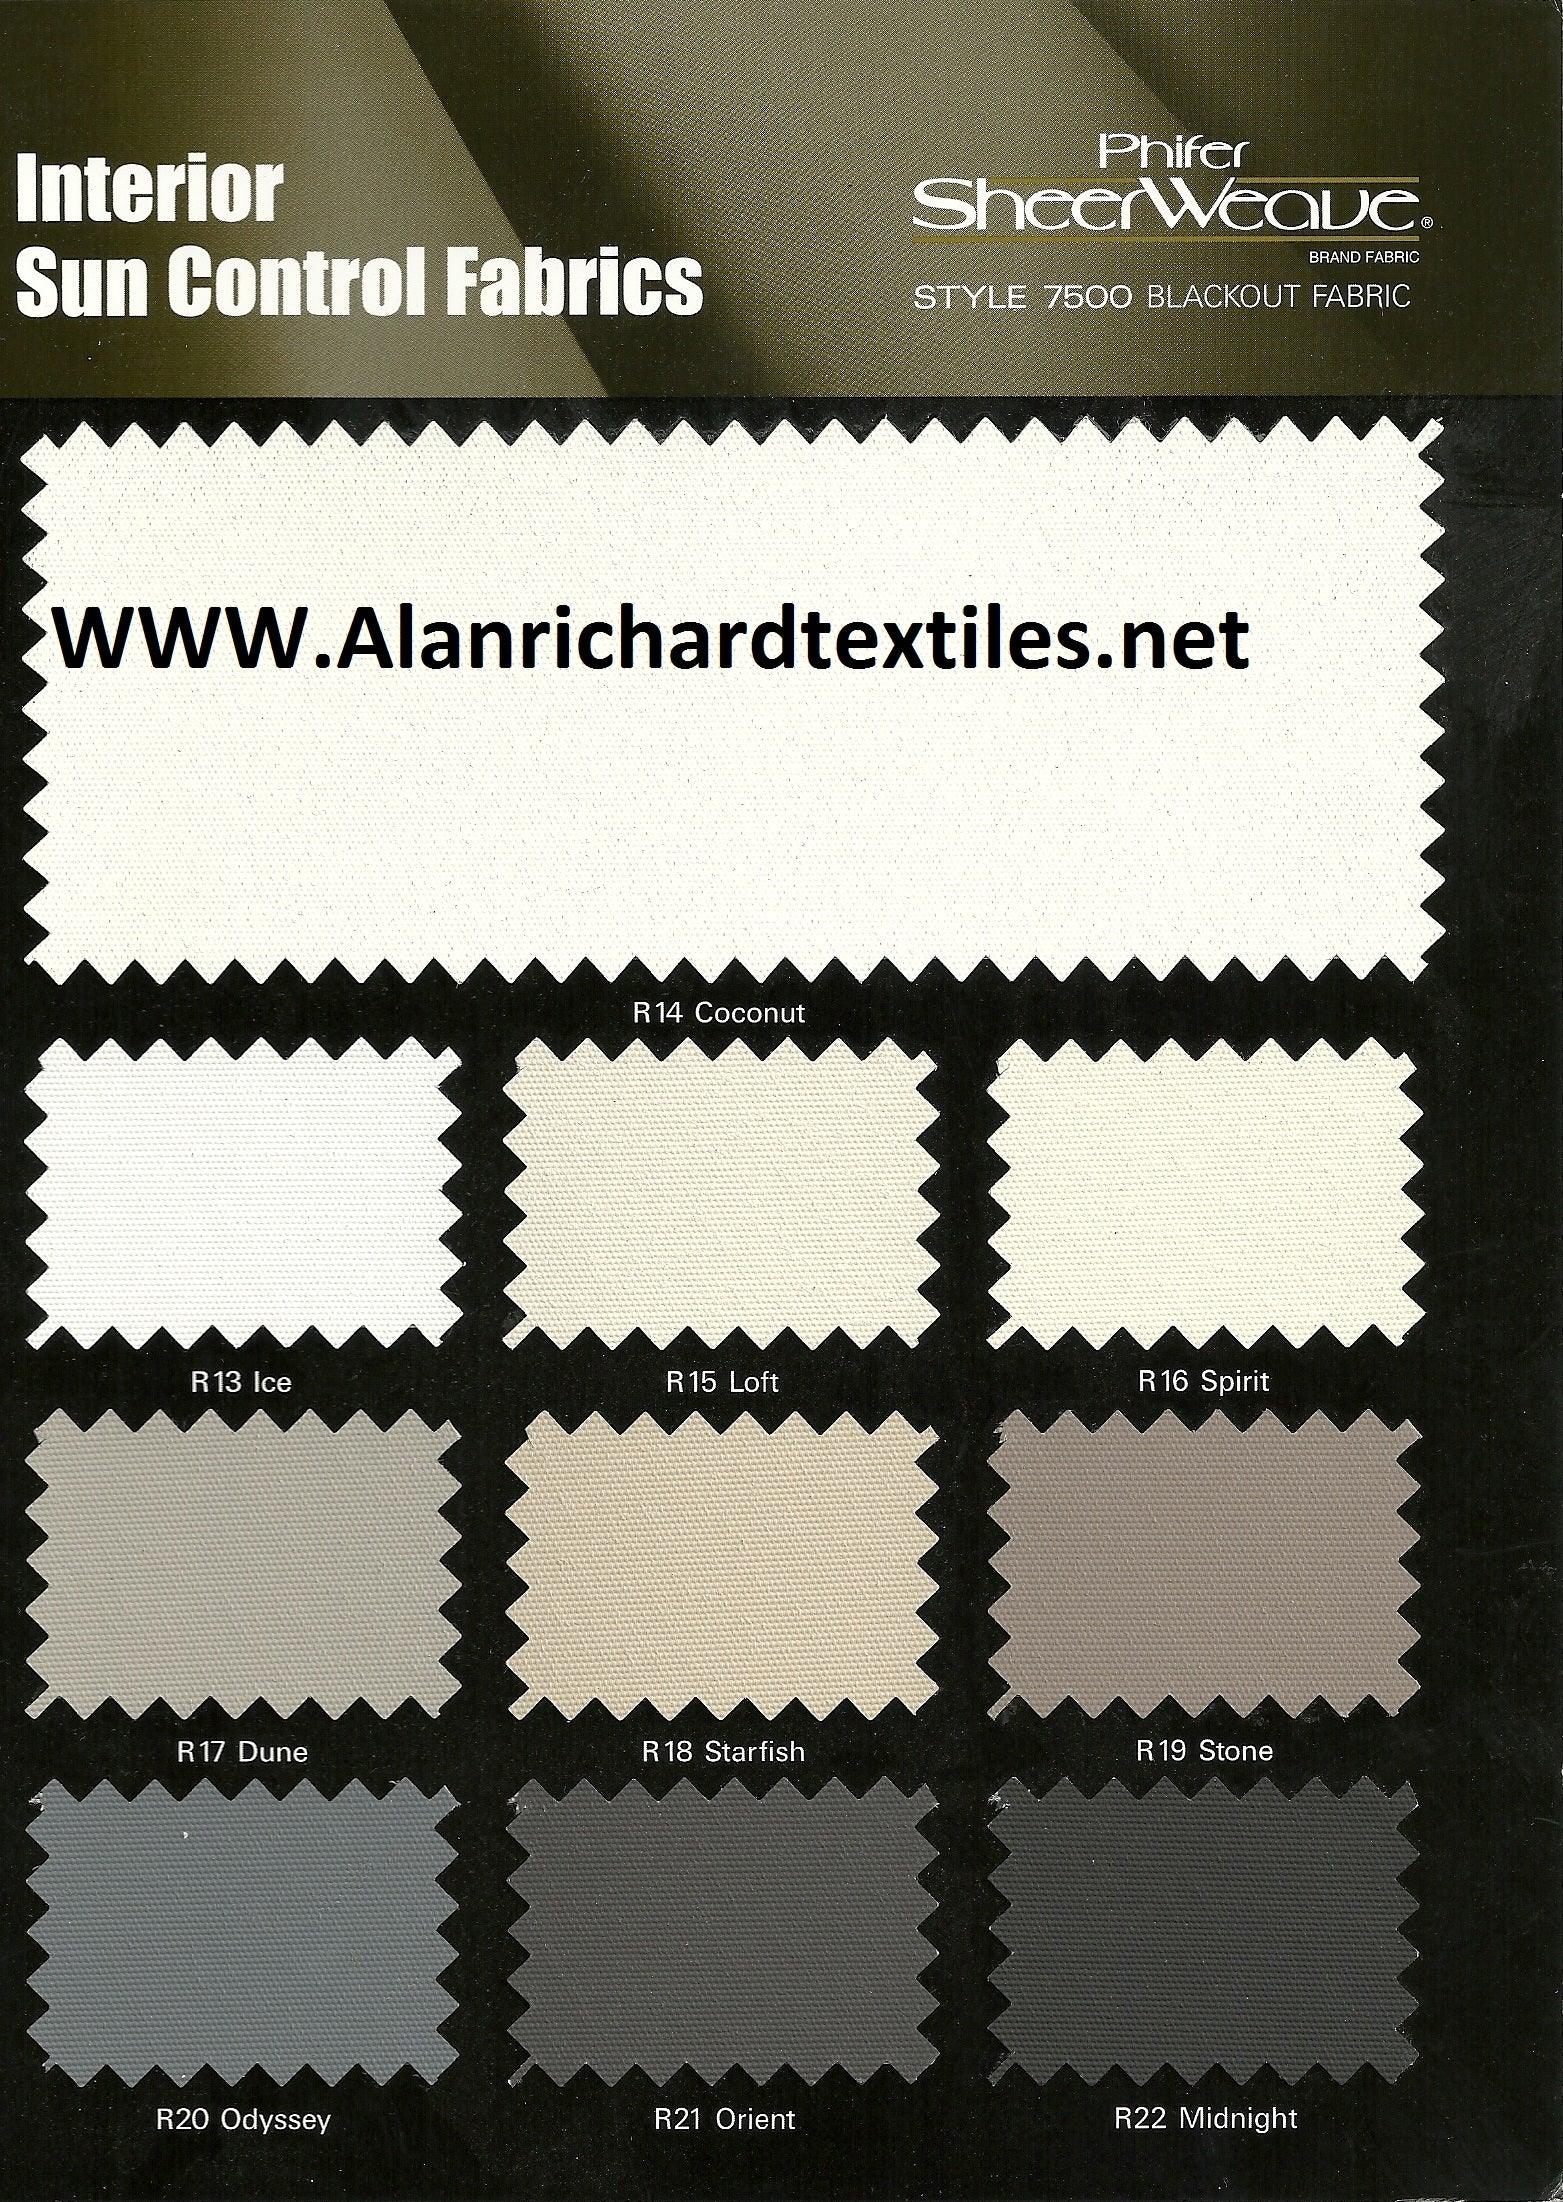 73-84"(Width) 7500 SheerWeave® Series - Alan Richard Textiles, LTD 7500 Phifer SheerWeave� Series (blackout)